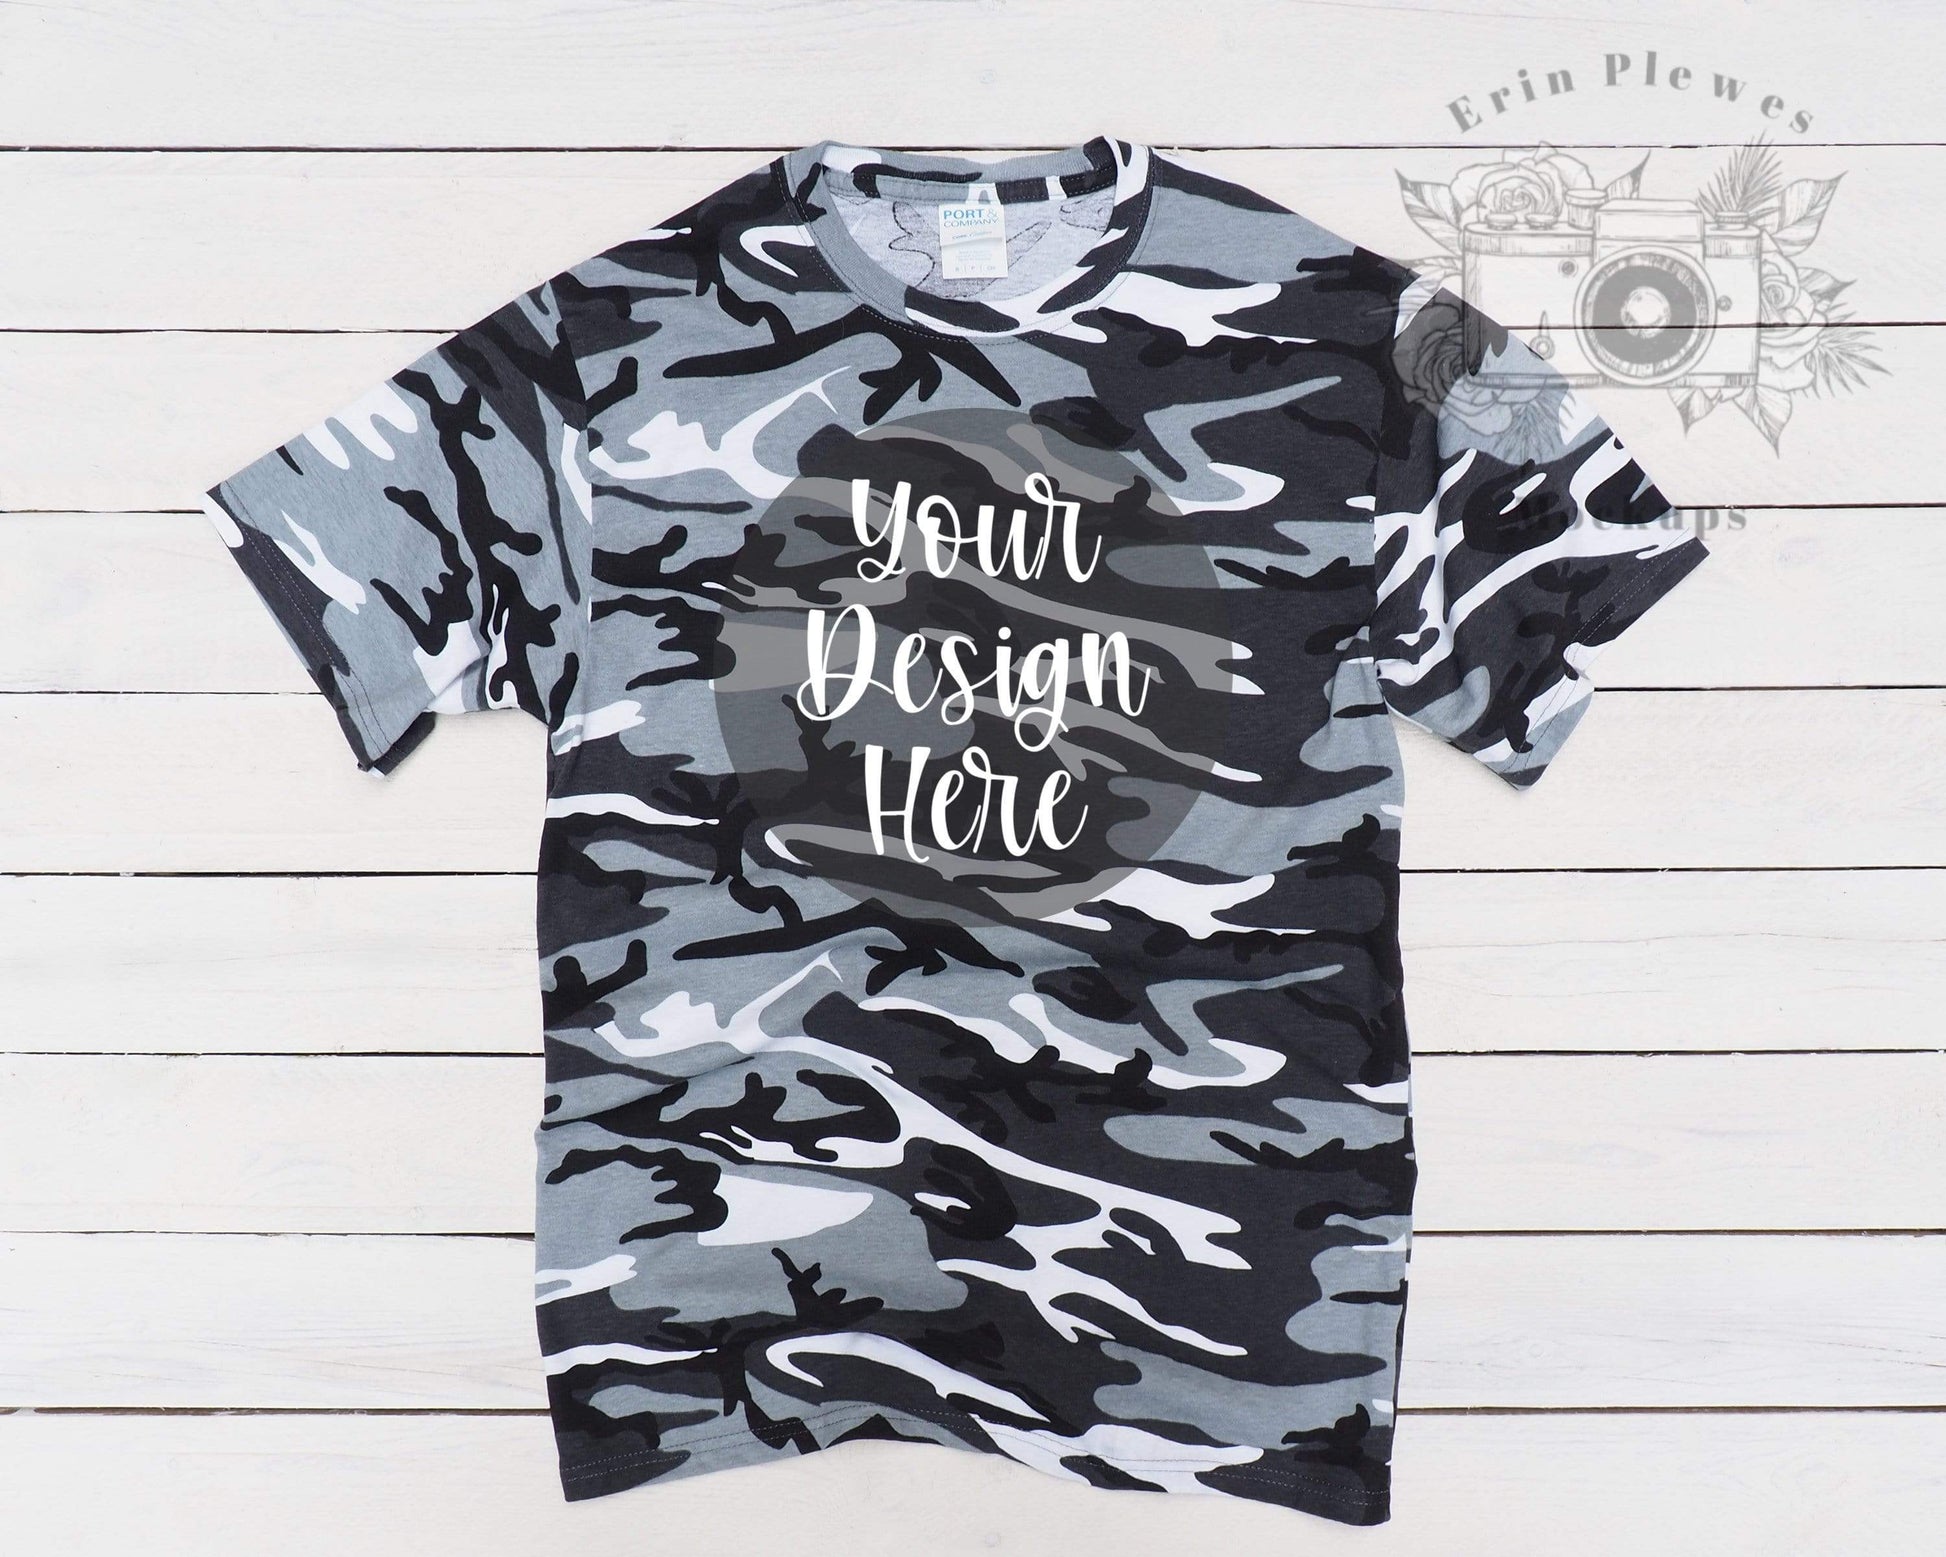 Erin Plewes Mockups T Shirt Mockup, Gray Camo TShirt Mockup for Lifestyle Stock Photo, Instant Digital Download Jpeg Flat Lay